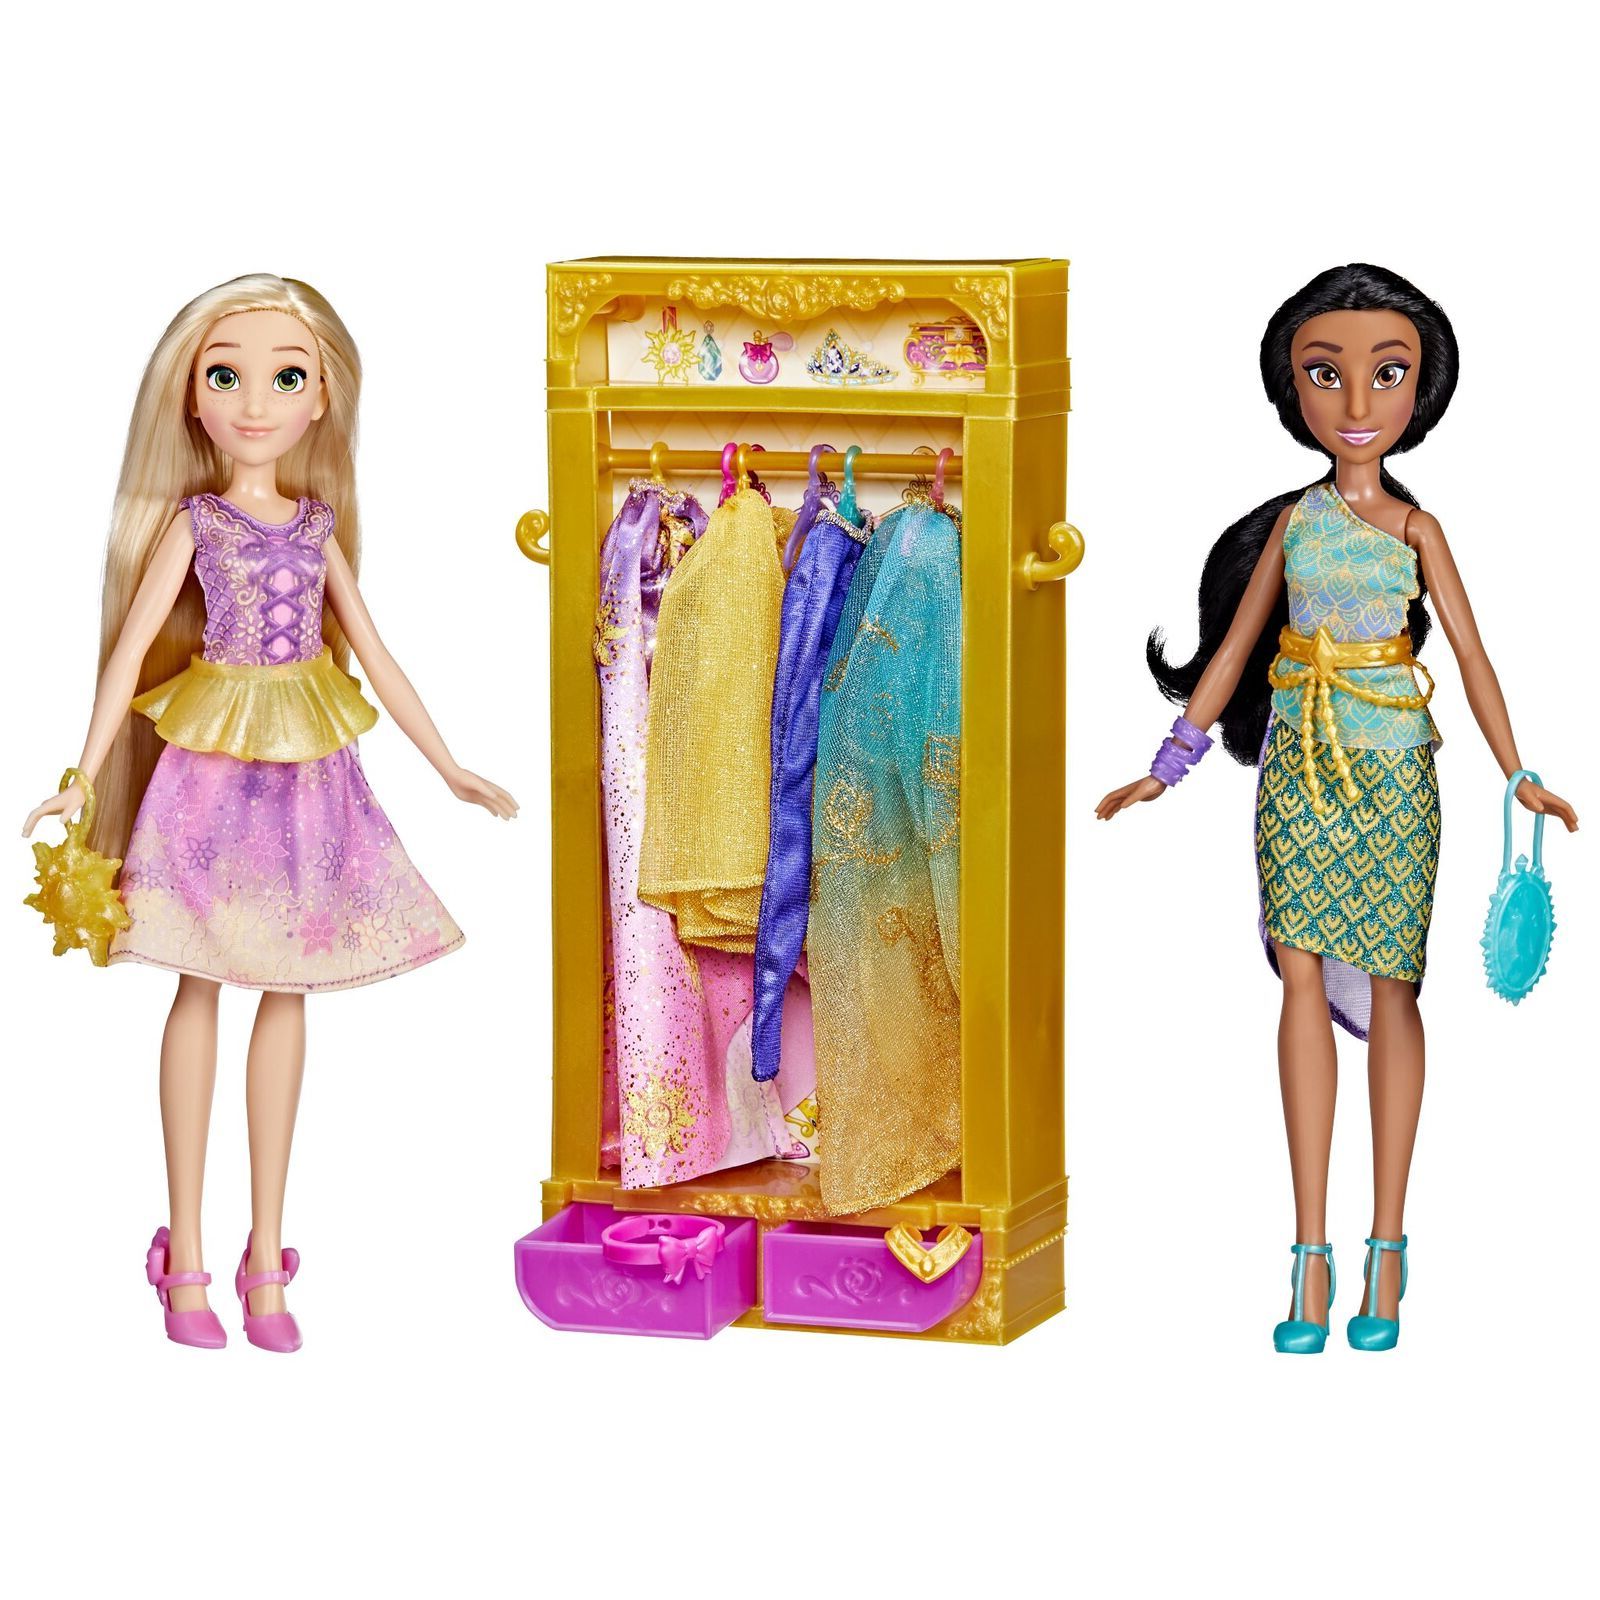 Disney Princess Life Ultimate Fashion Wardrobe At Toys R Us For The Princess Wardrobes (View 12 of 20)